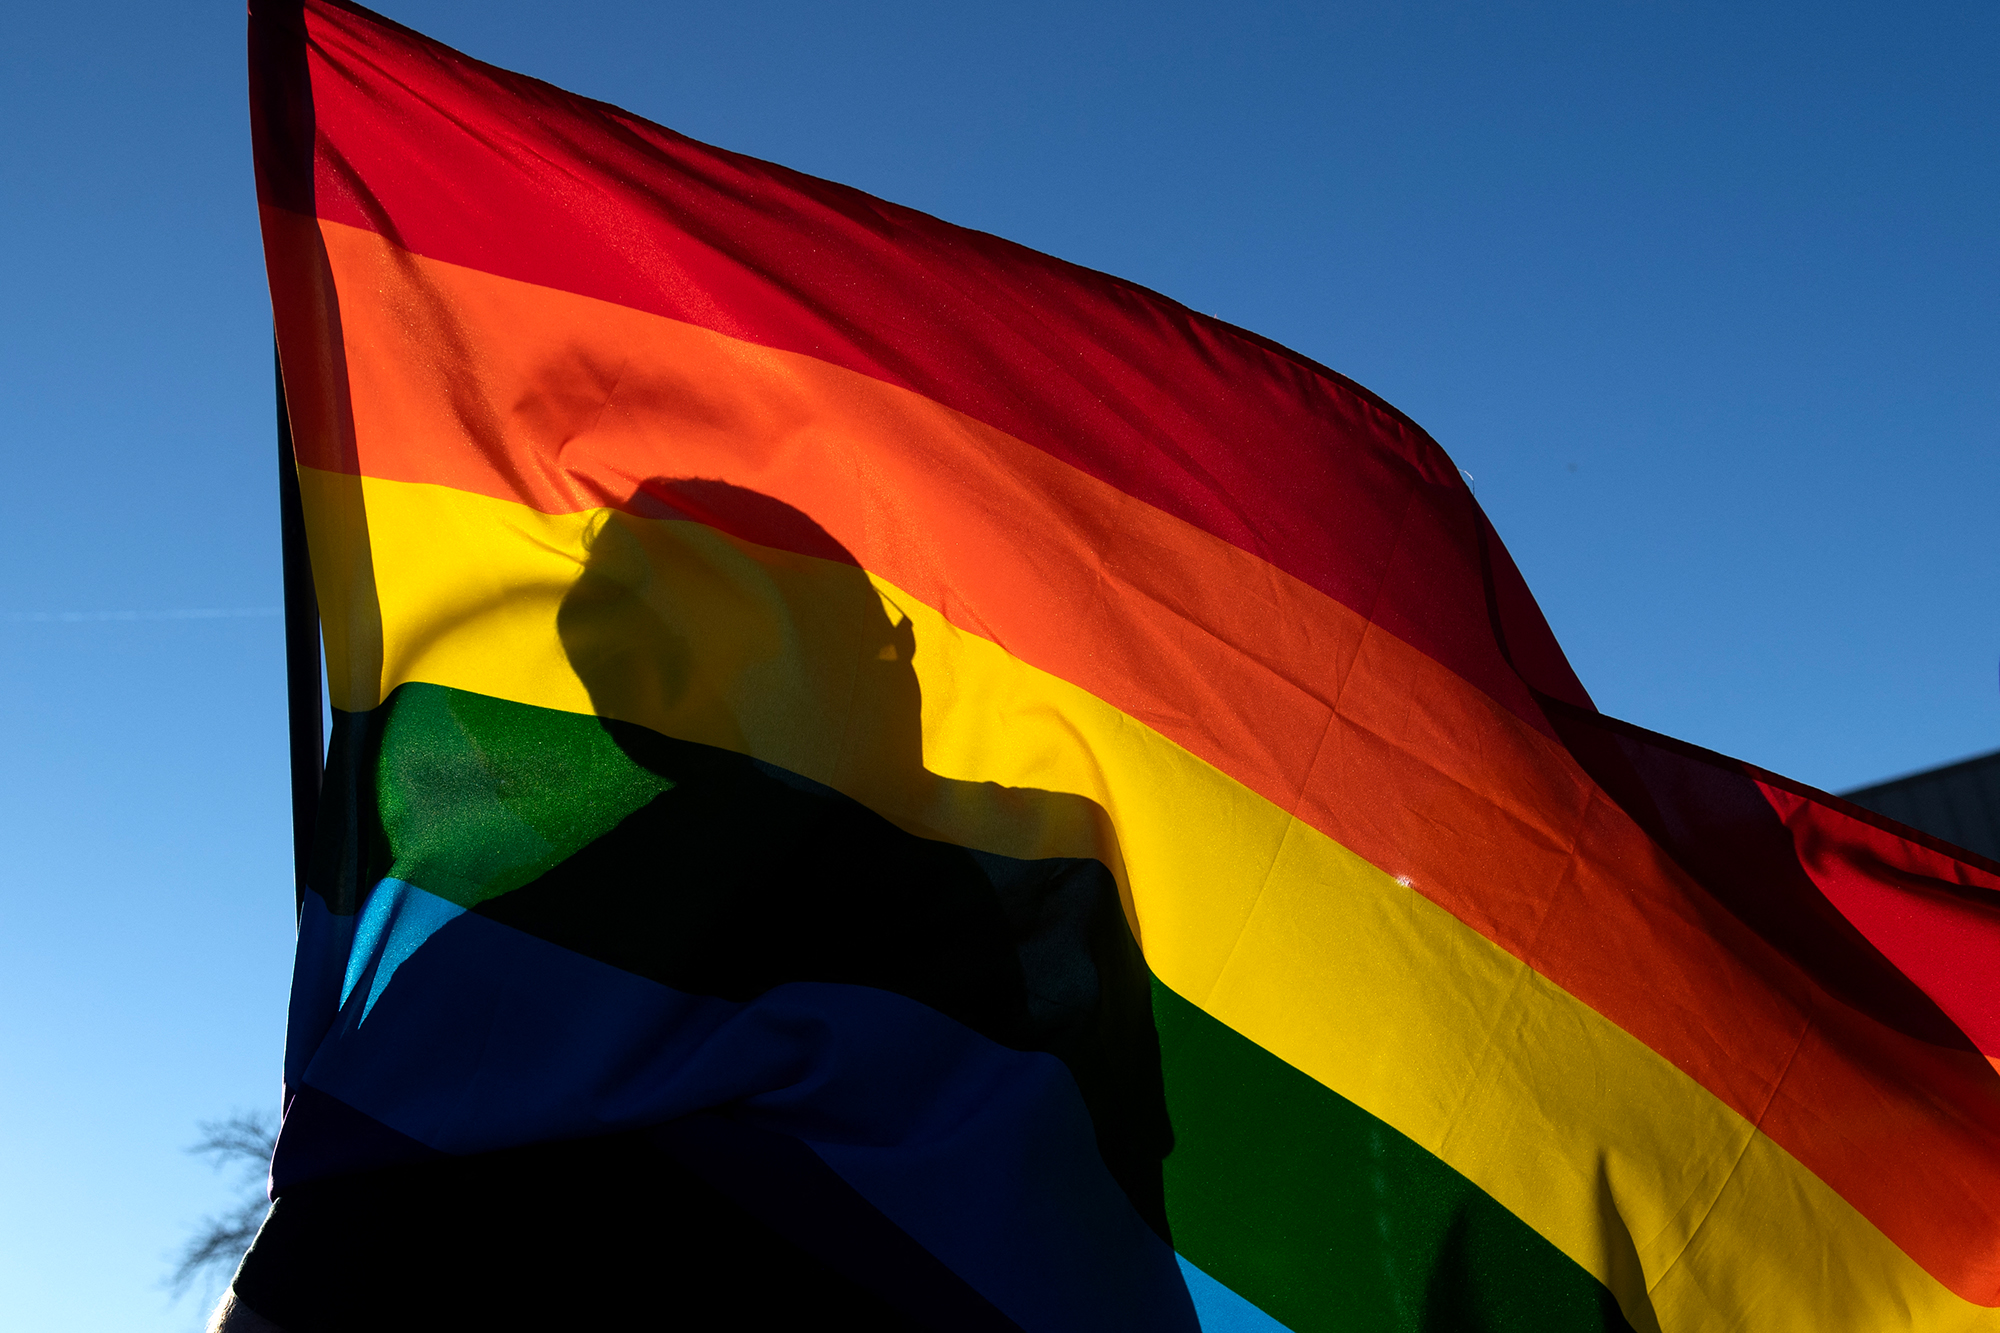 Regenbogenfahne - LGBTQ-Symbol